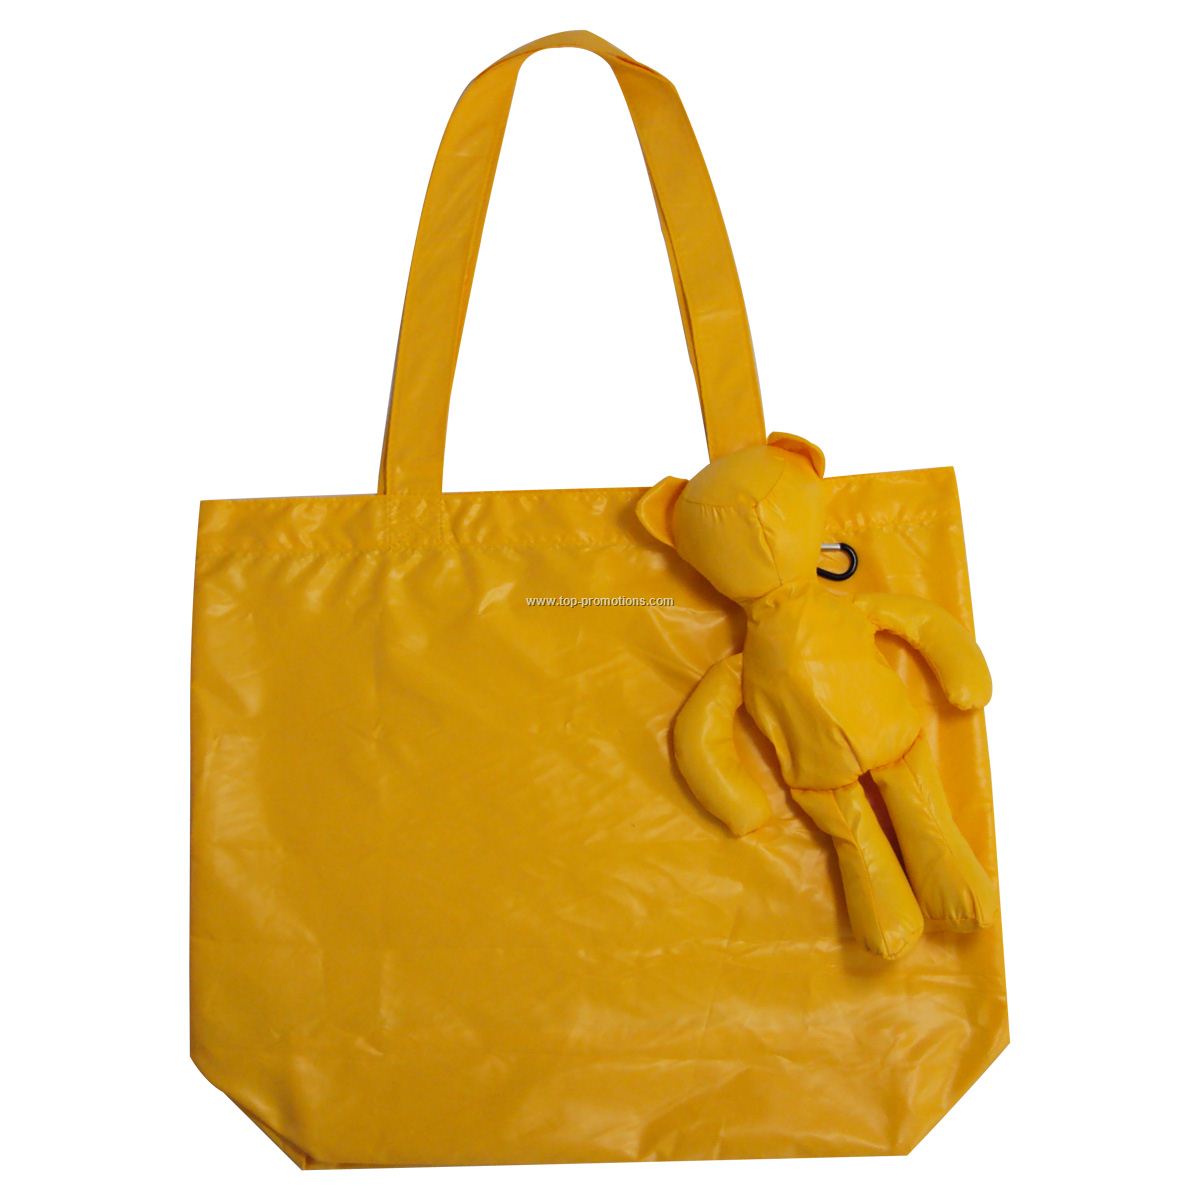 Bear Shopping bags